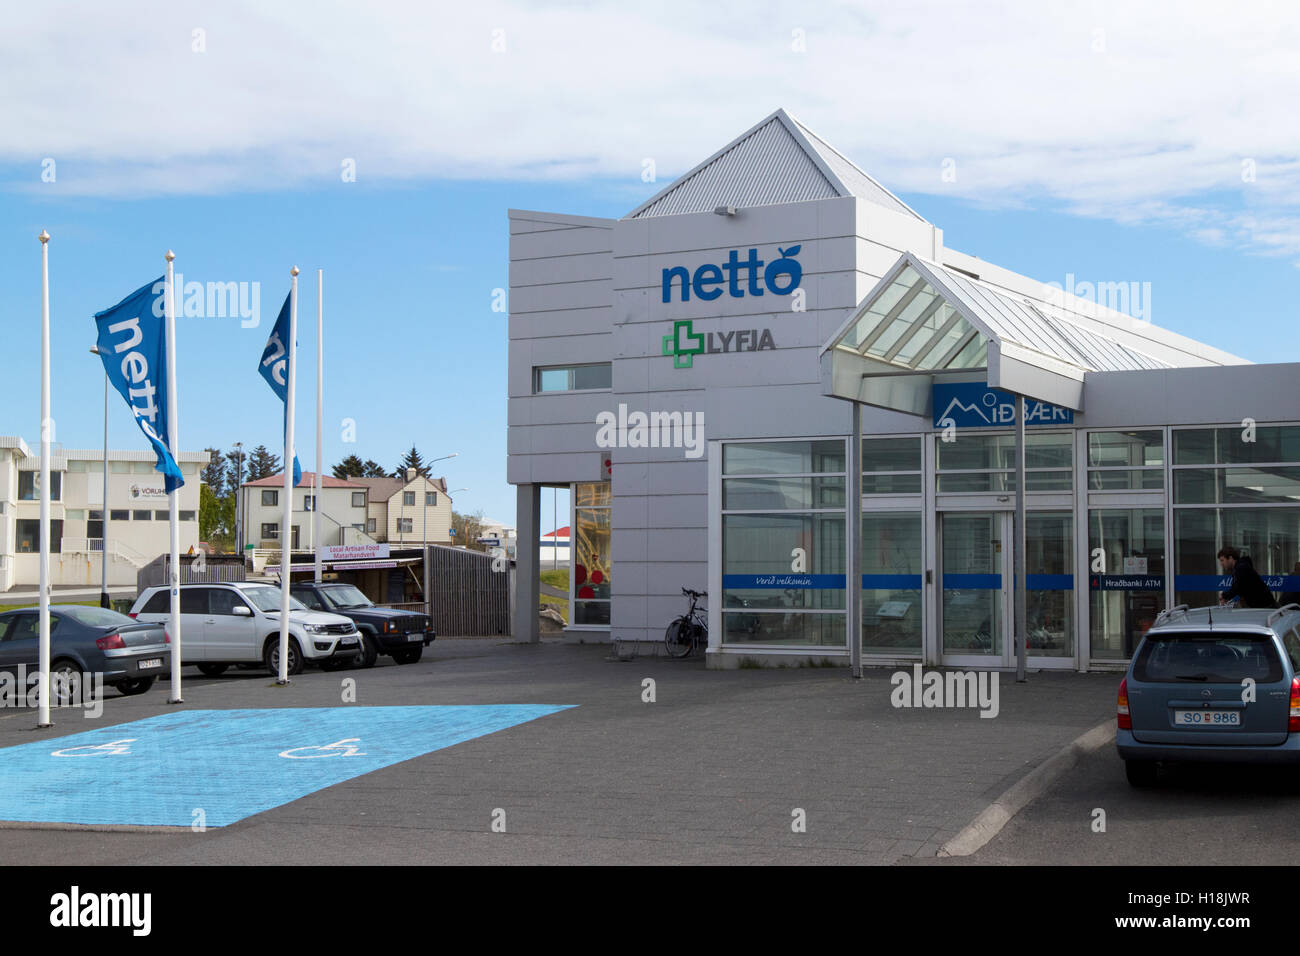 Netto supermarket hofn Iceland Stock Photo